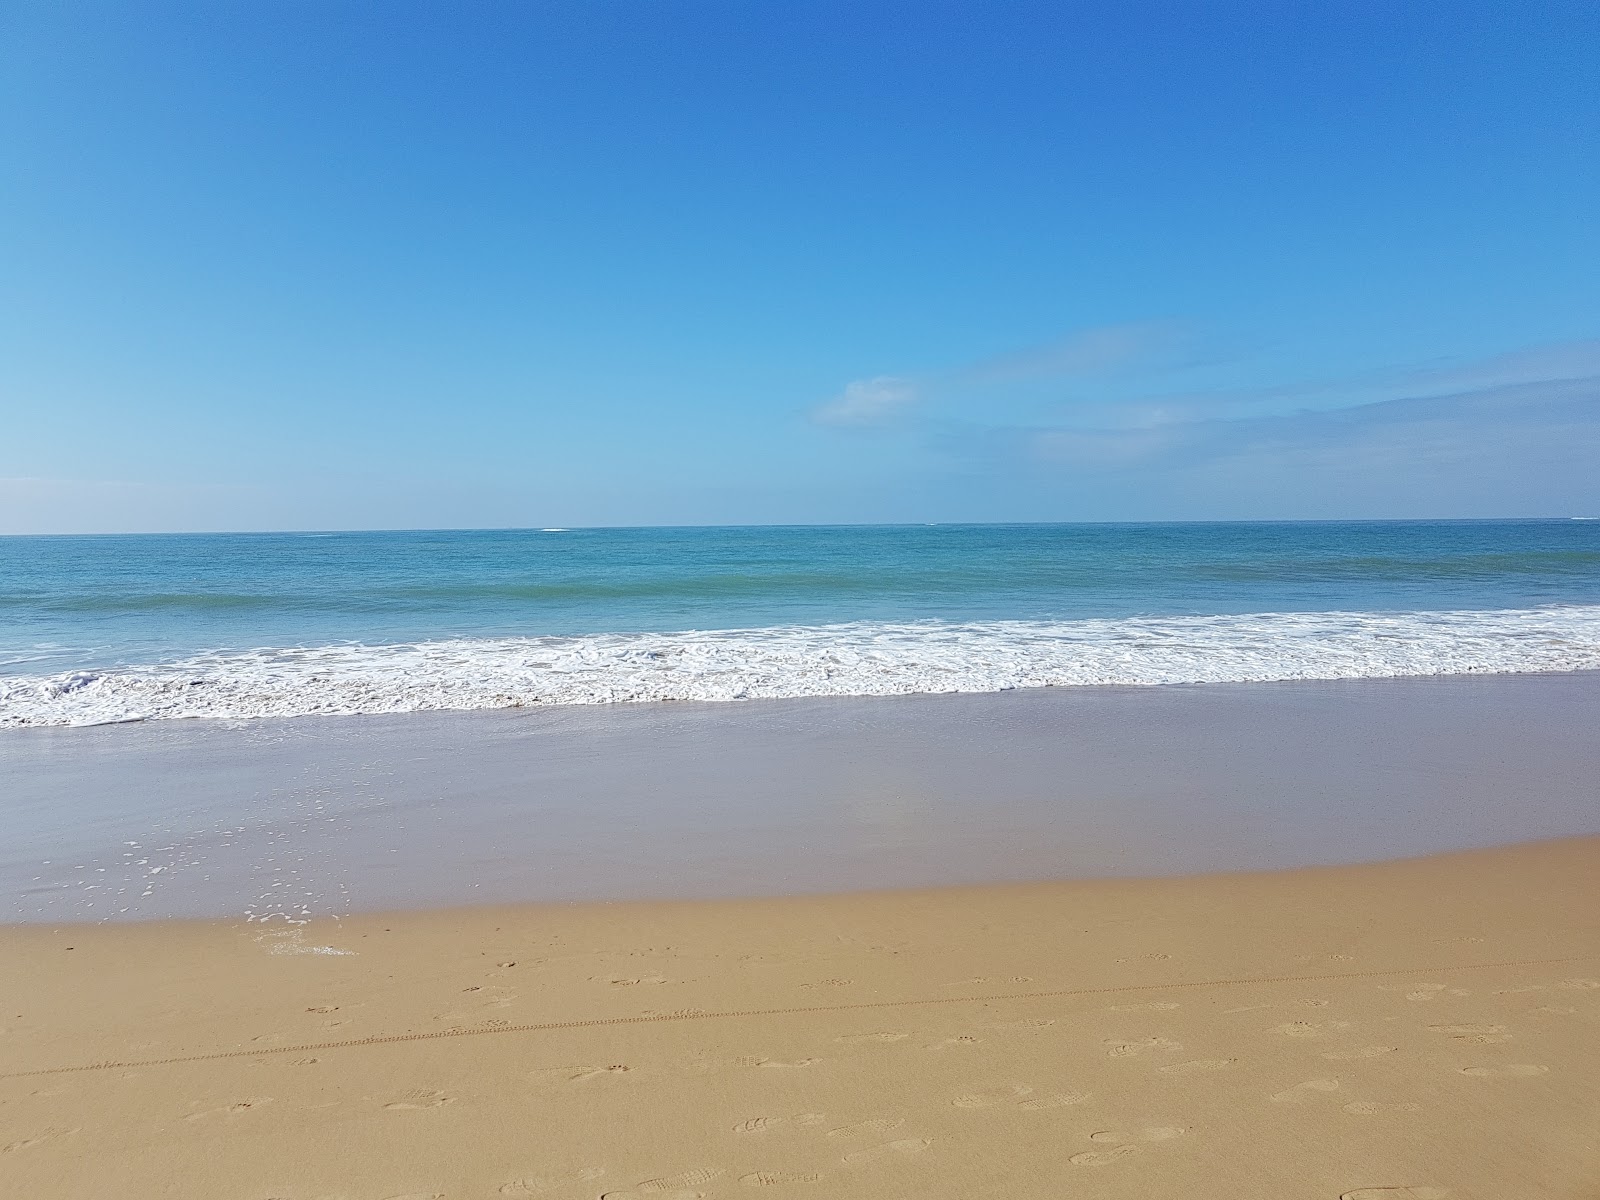 Foto de Playa de la Costilla com reto e longo